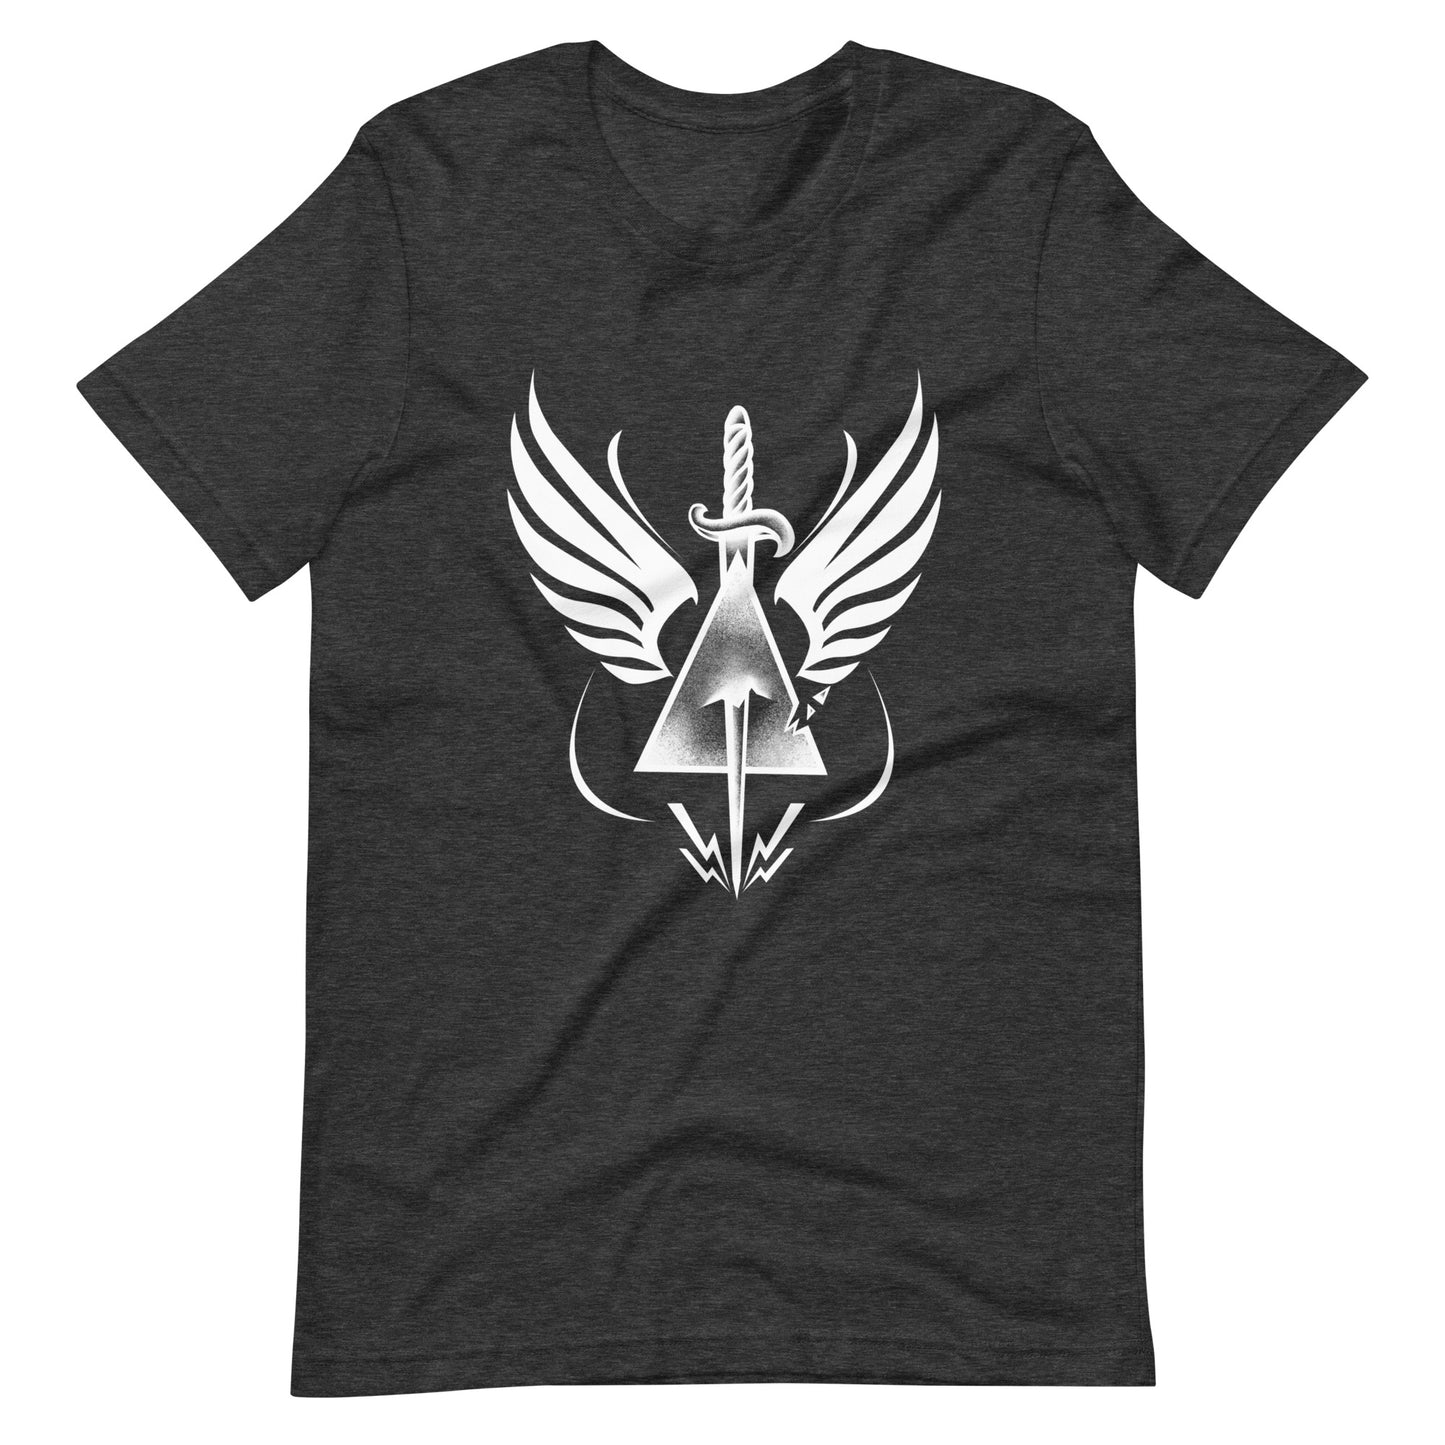 Dead Triangle - Men's t-shirt - Dark Grey Heather Front